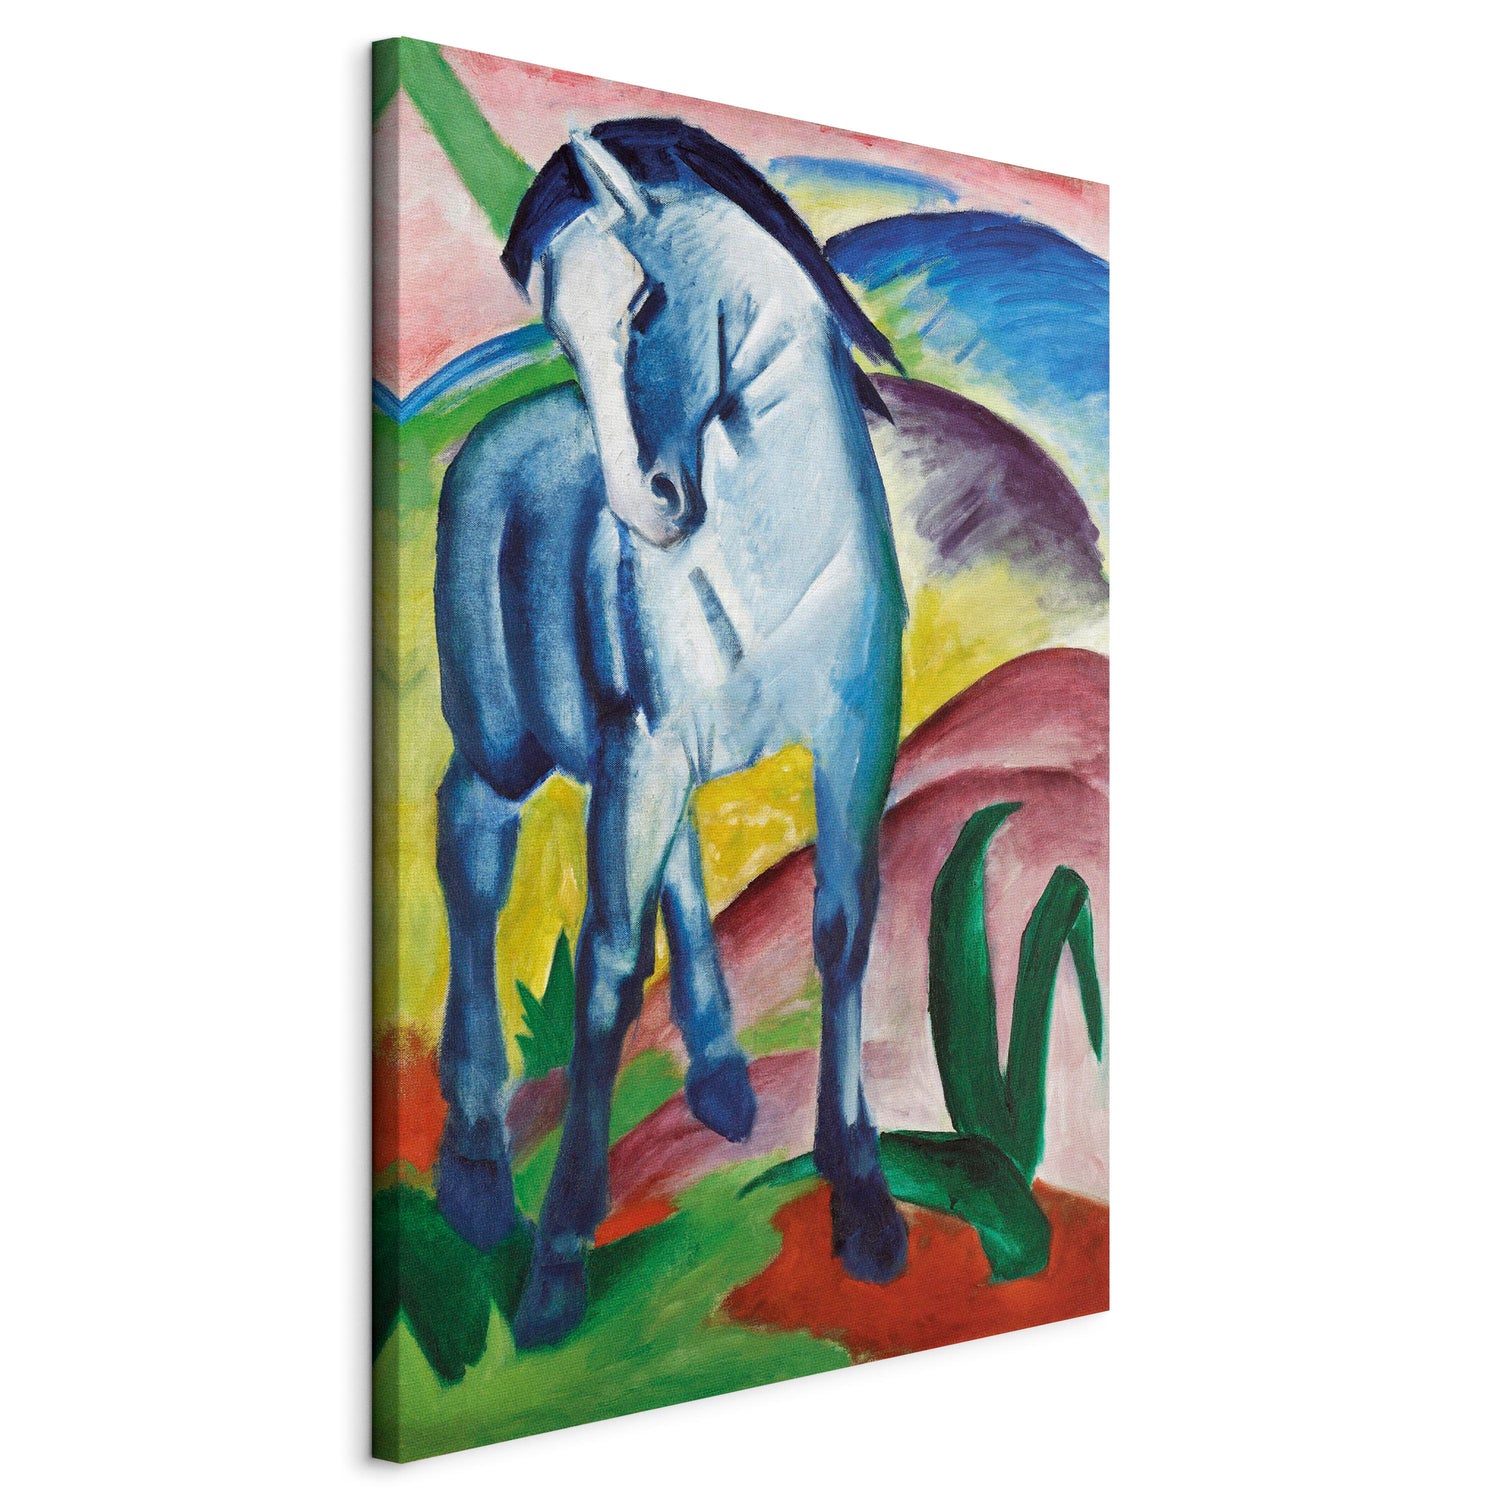 Reproduction Canvas Wall Art - Blue Horse